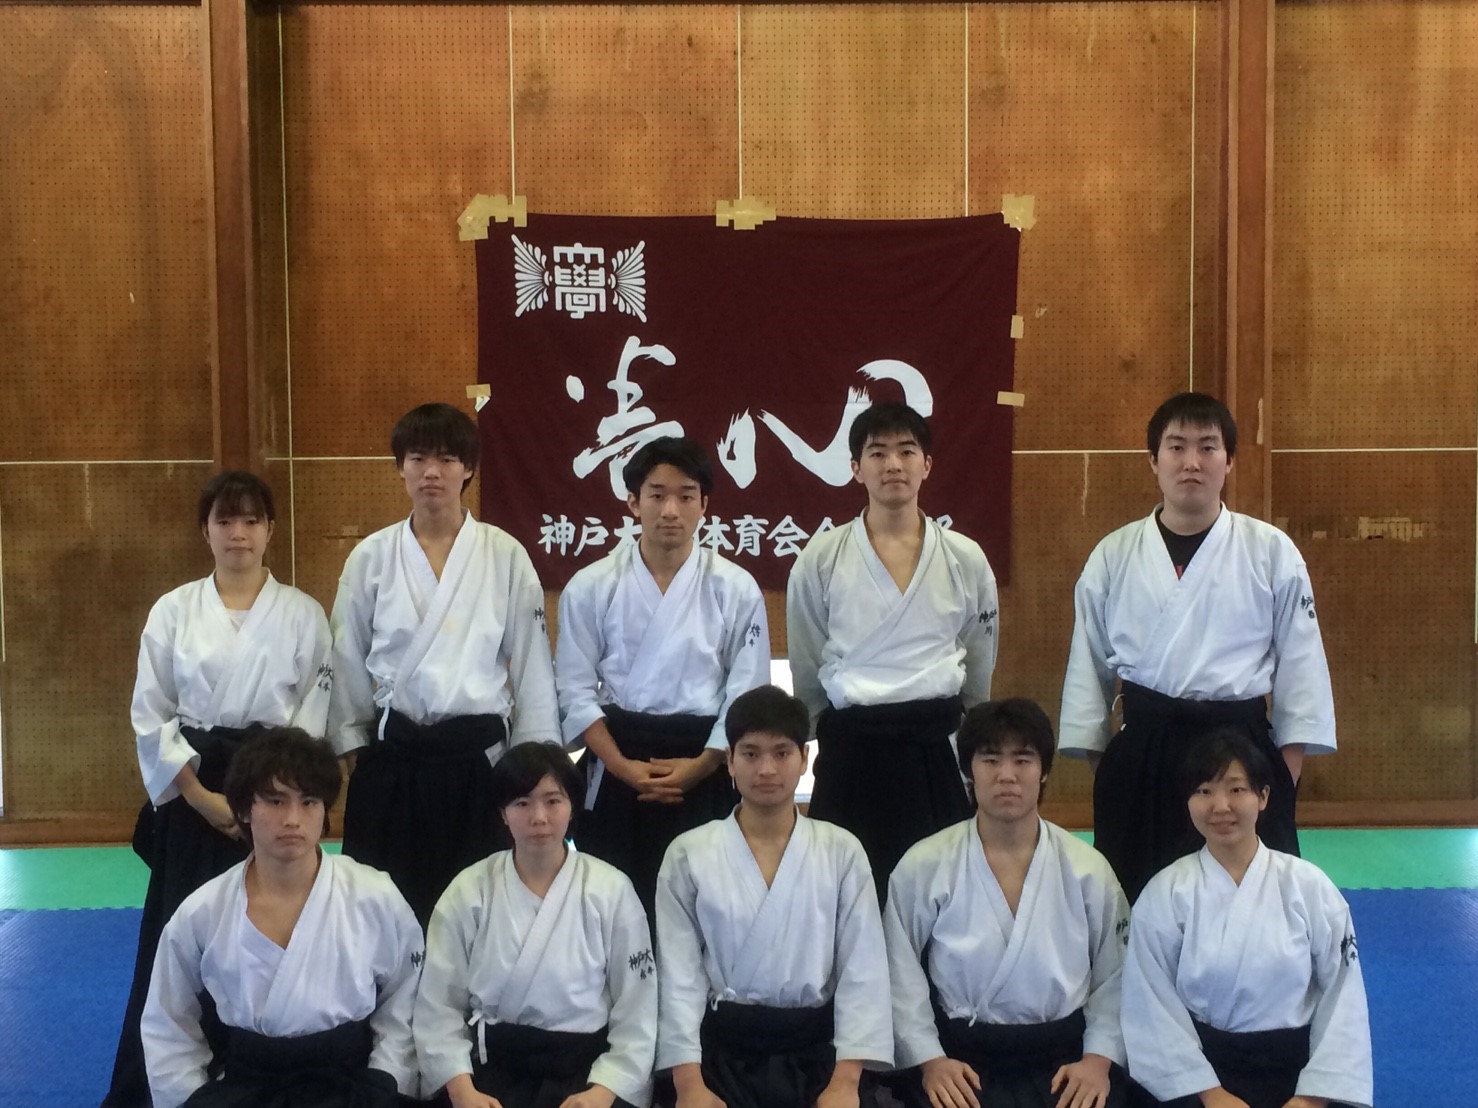 Kobe University Aikido Club members